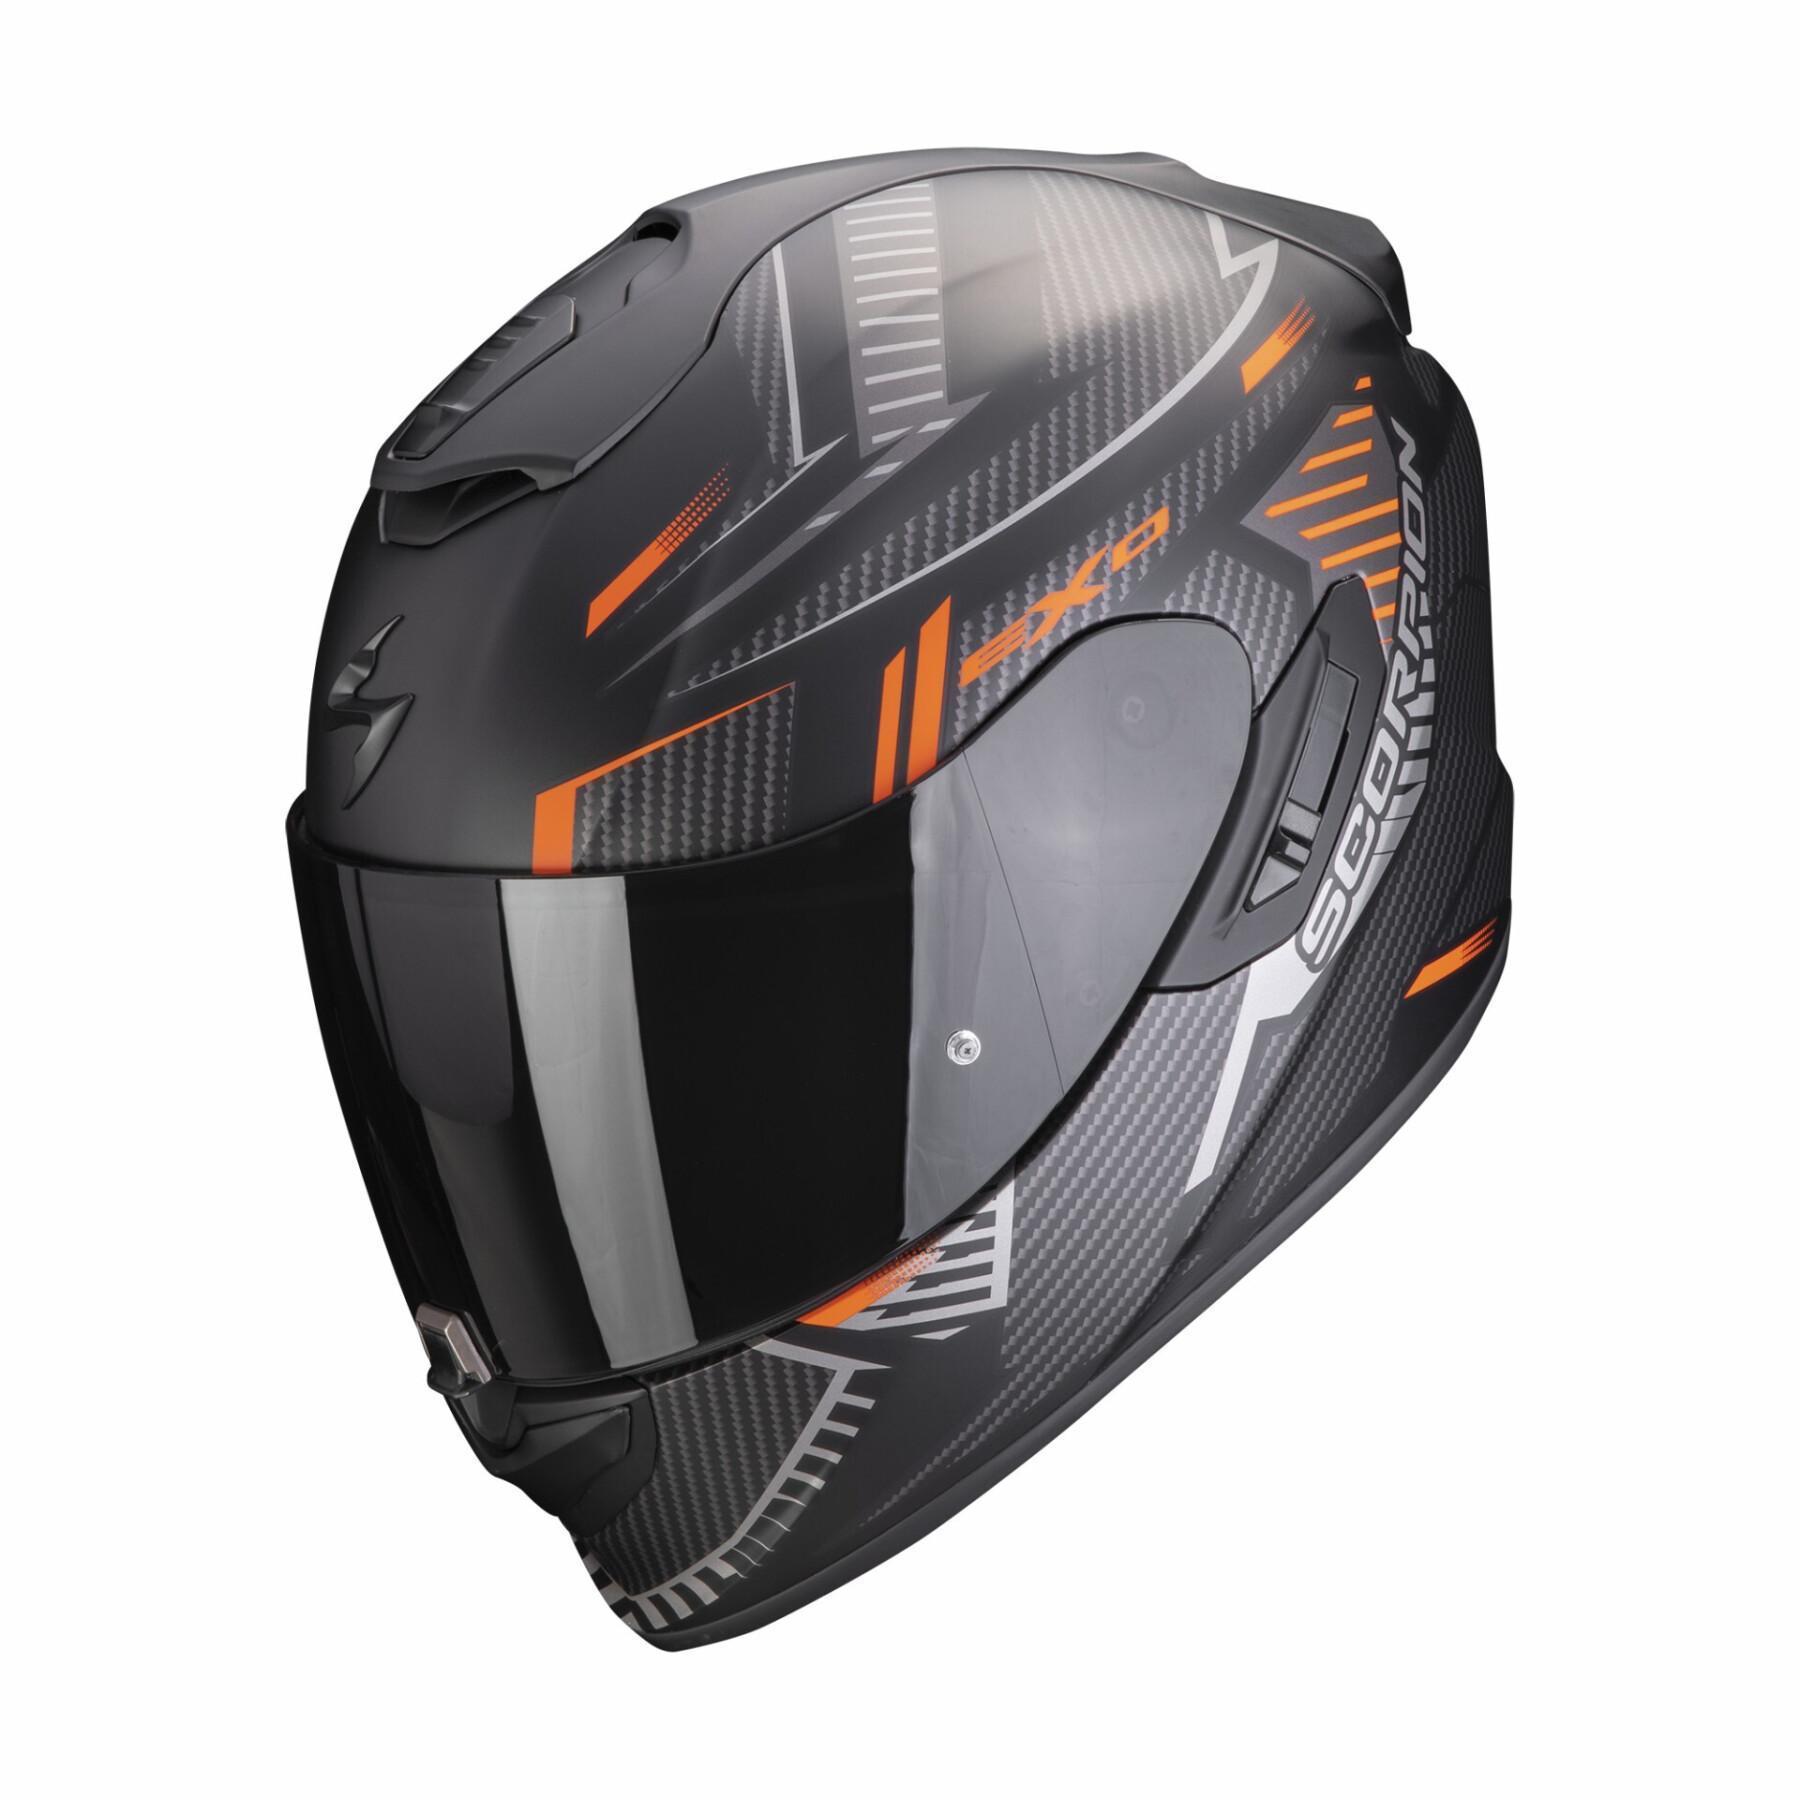 Full face motorcycle helmet Scorpion Exo-1400 Evo Air Shell ECE 22-06